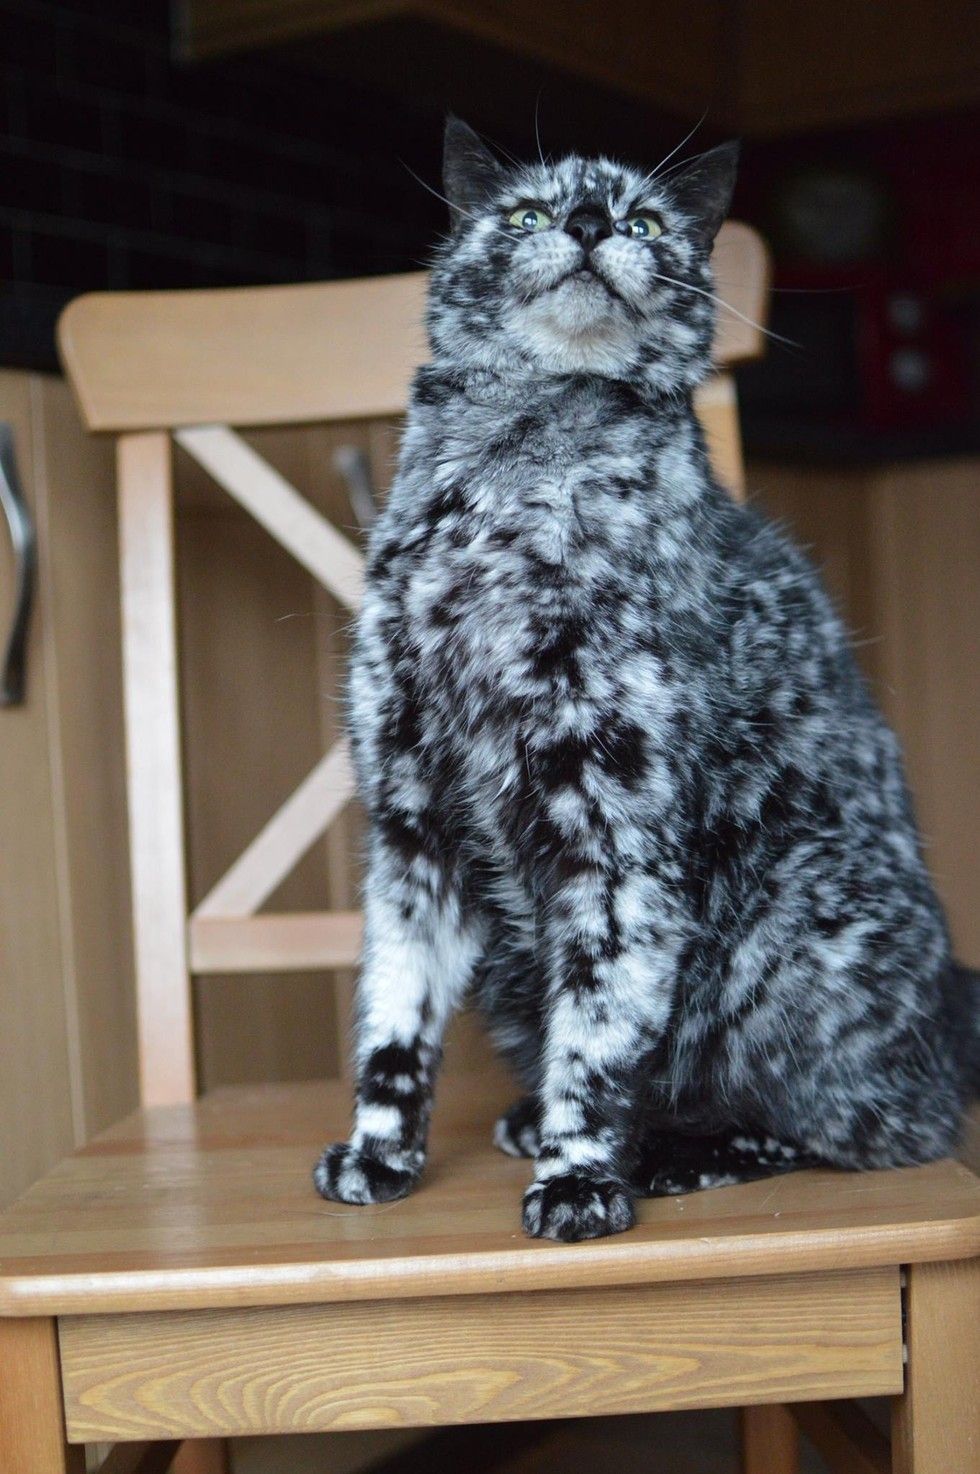 Scrappy Born a Black Cat Now Turning White due to Vitiligo - Love Meow